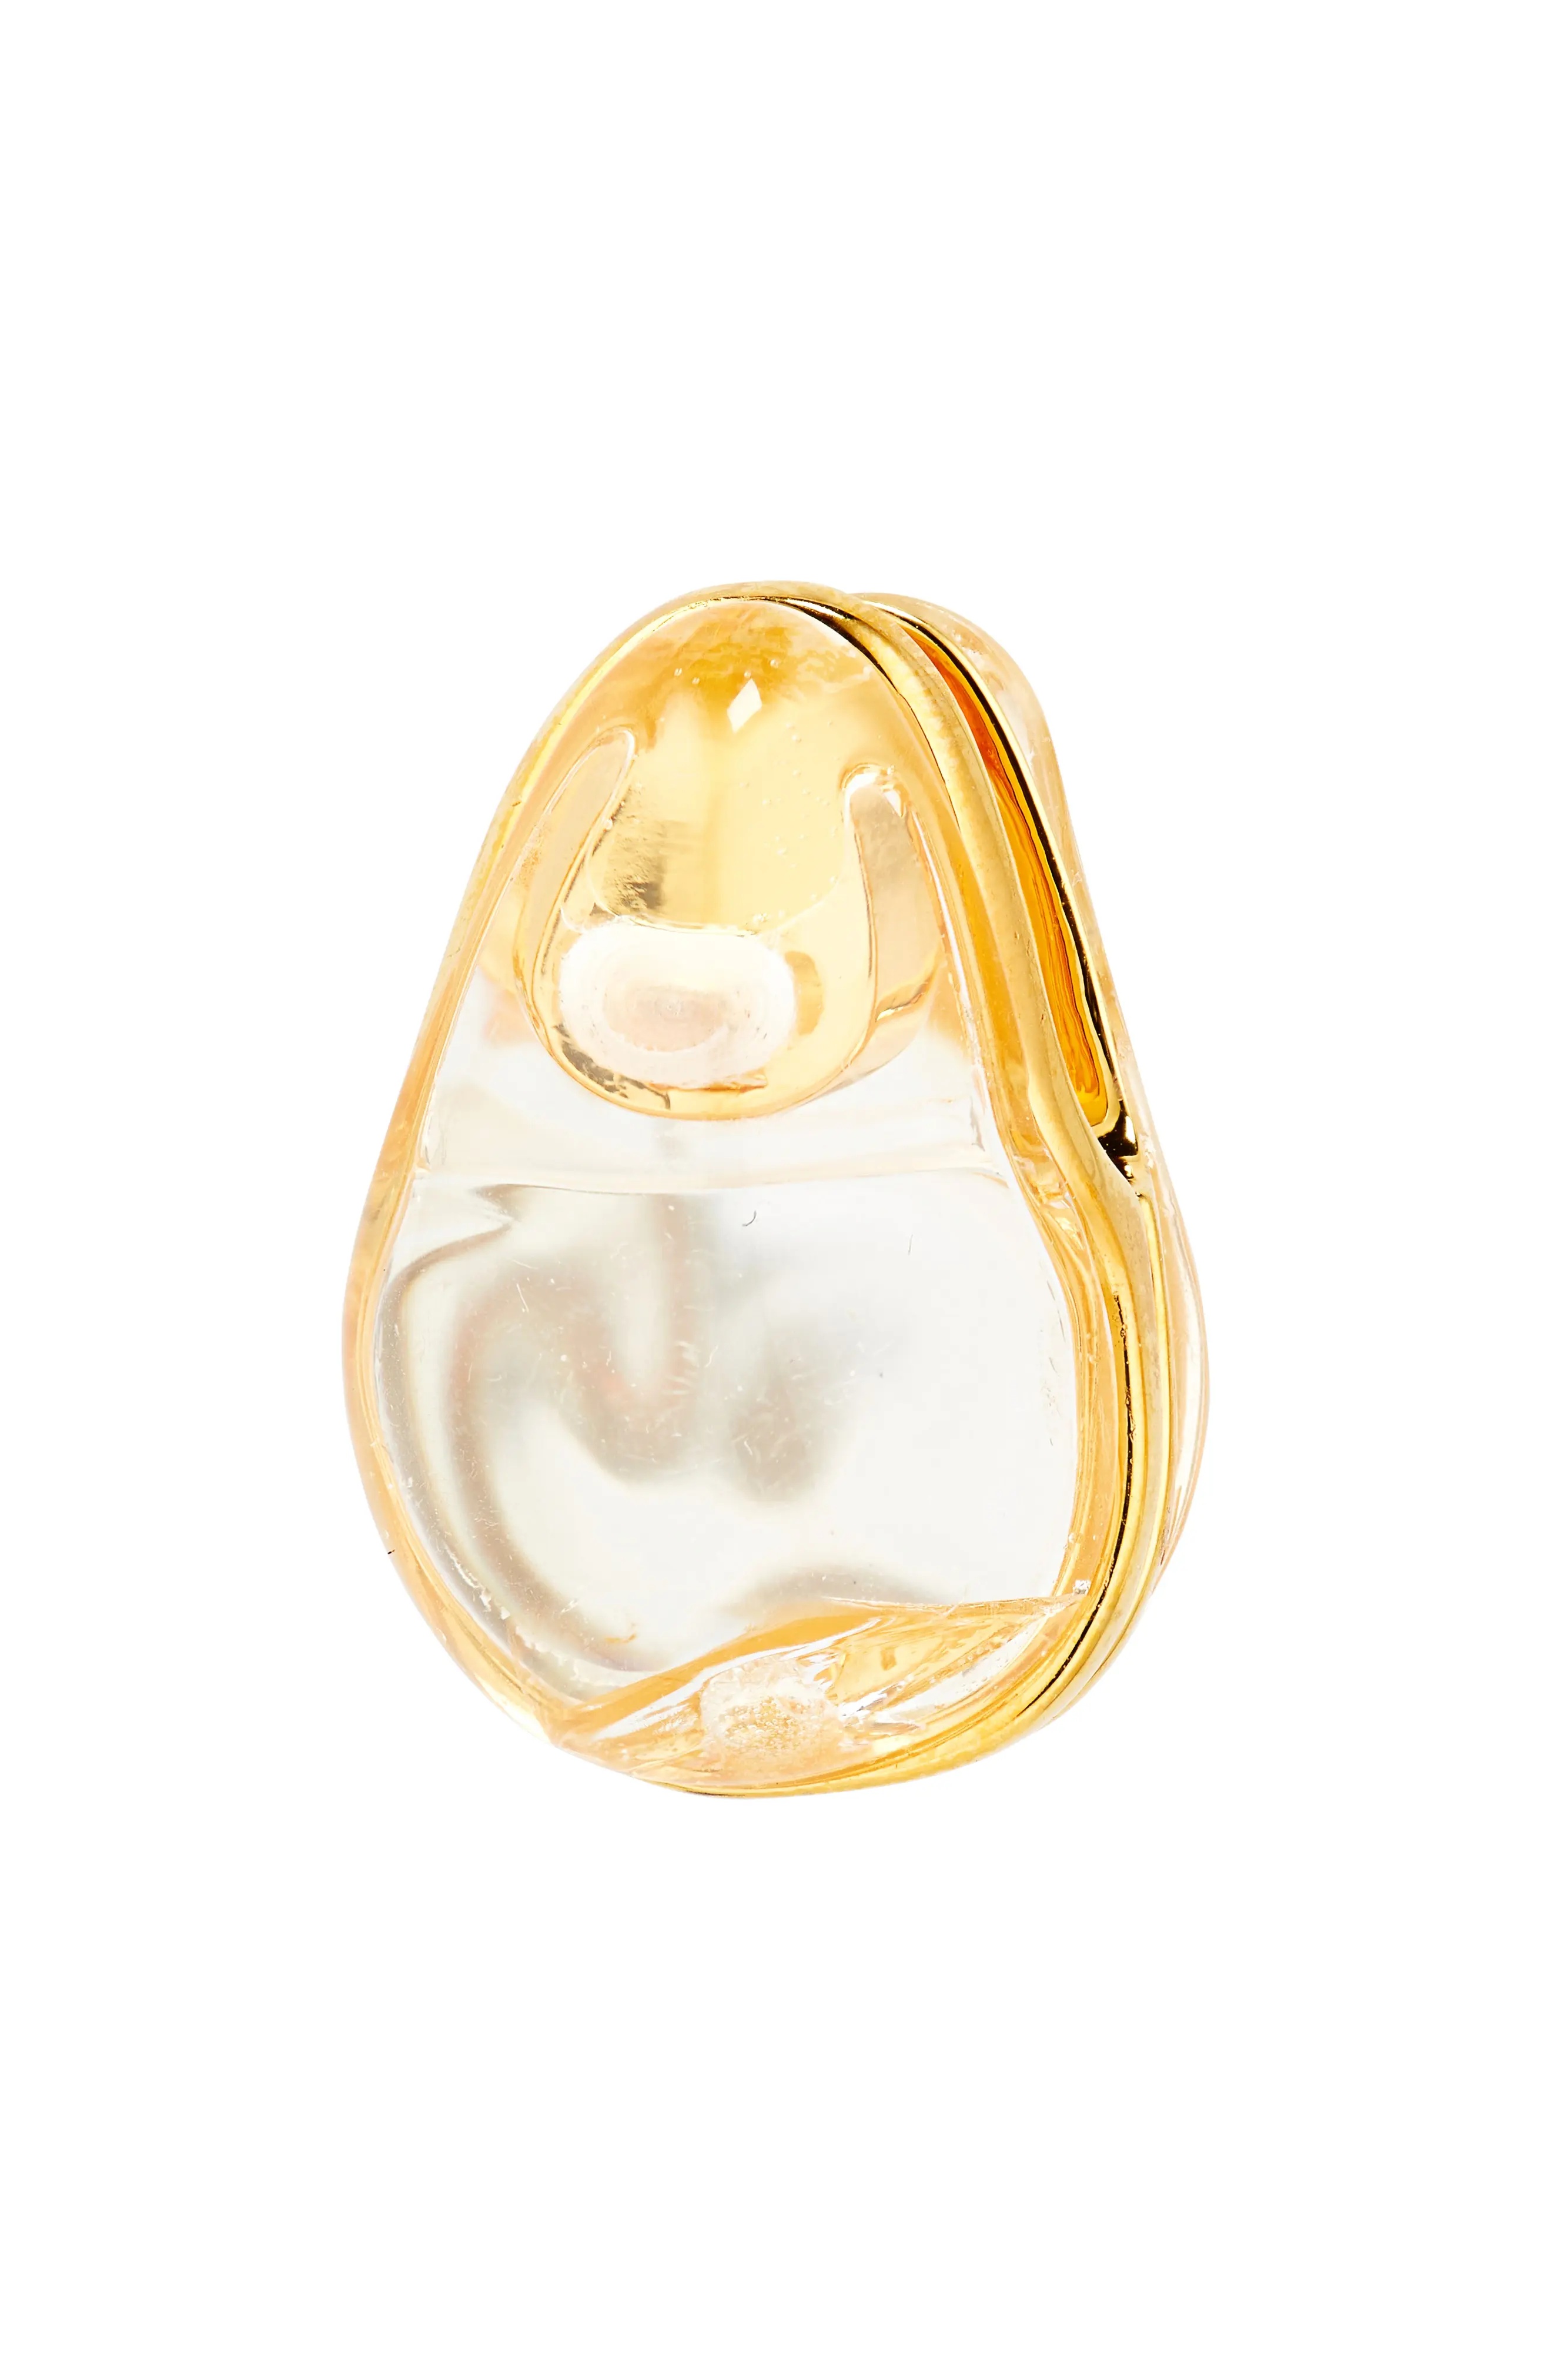 Crystal Pebble Earrings in Gold/Transparent Quartz - 3